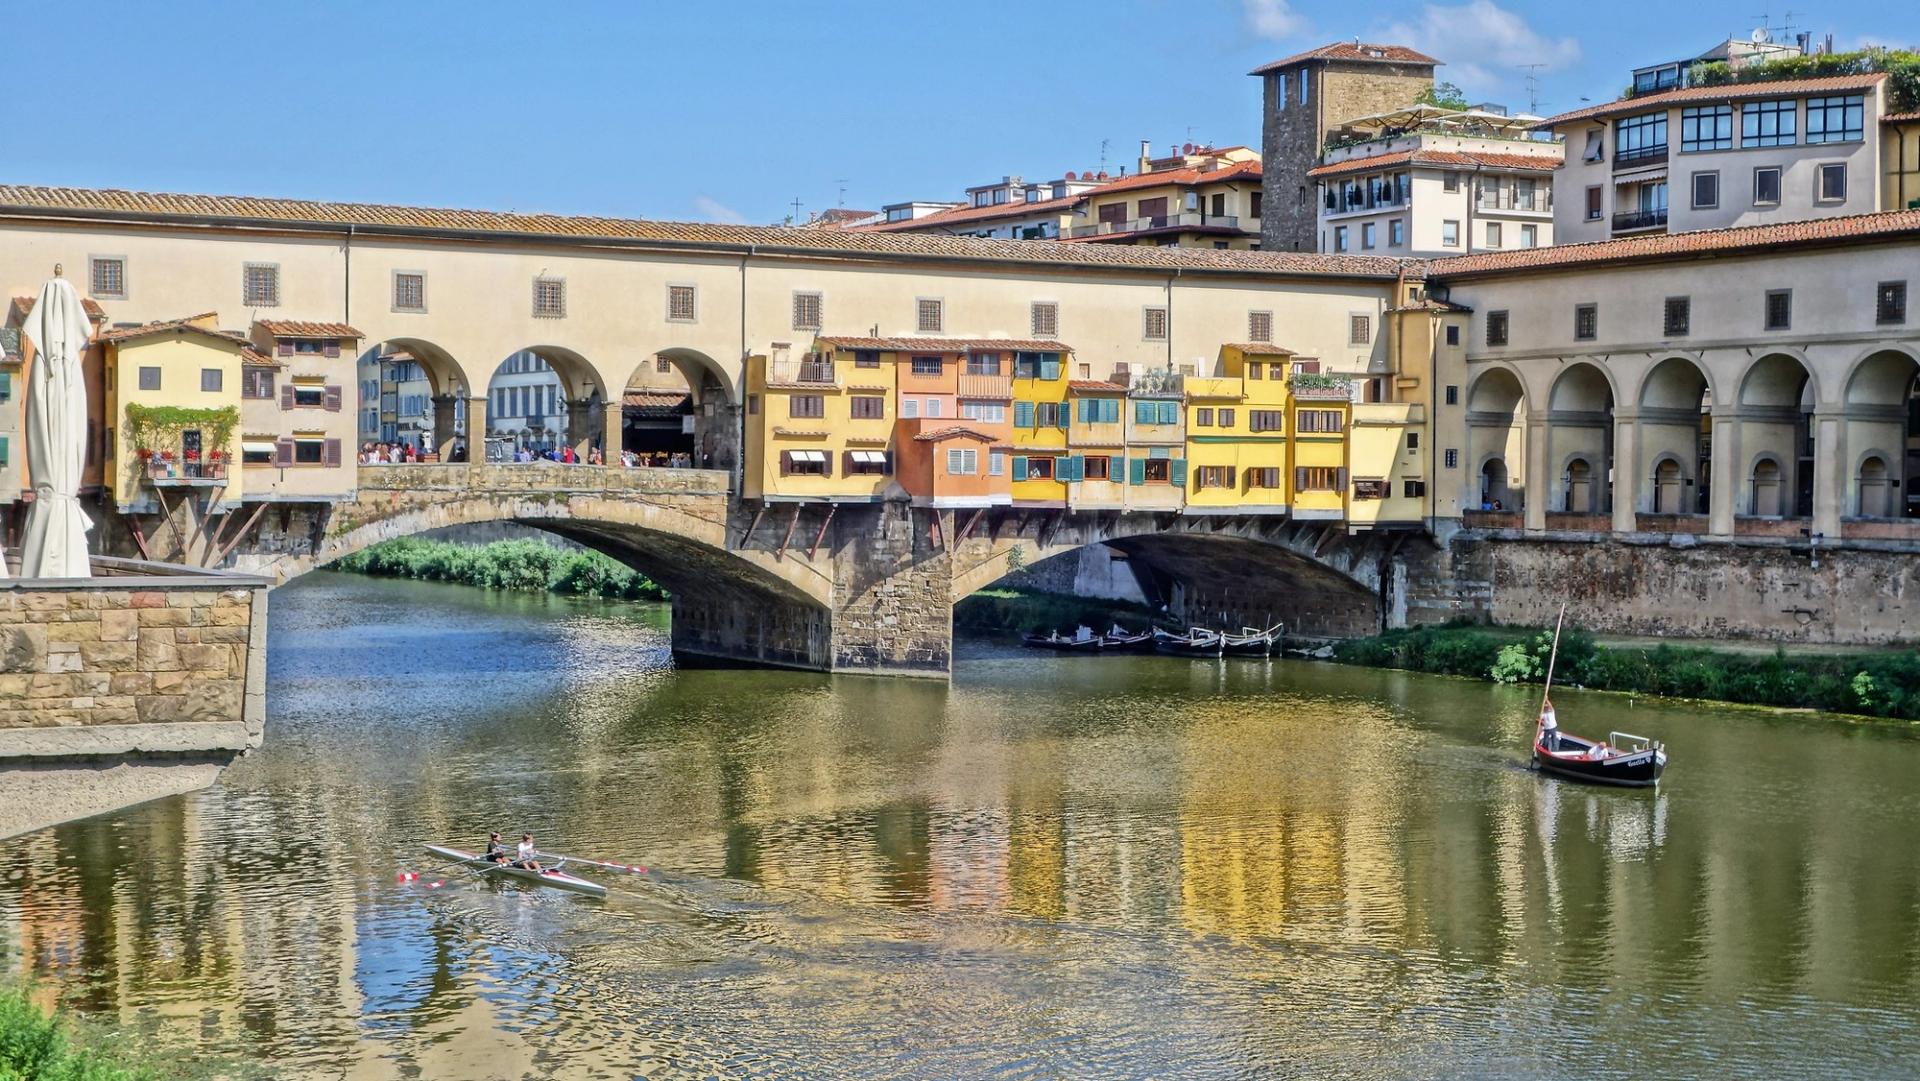 Ponte Vecchio in Florence, Italy Photo: gula08